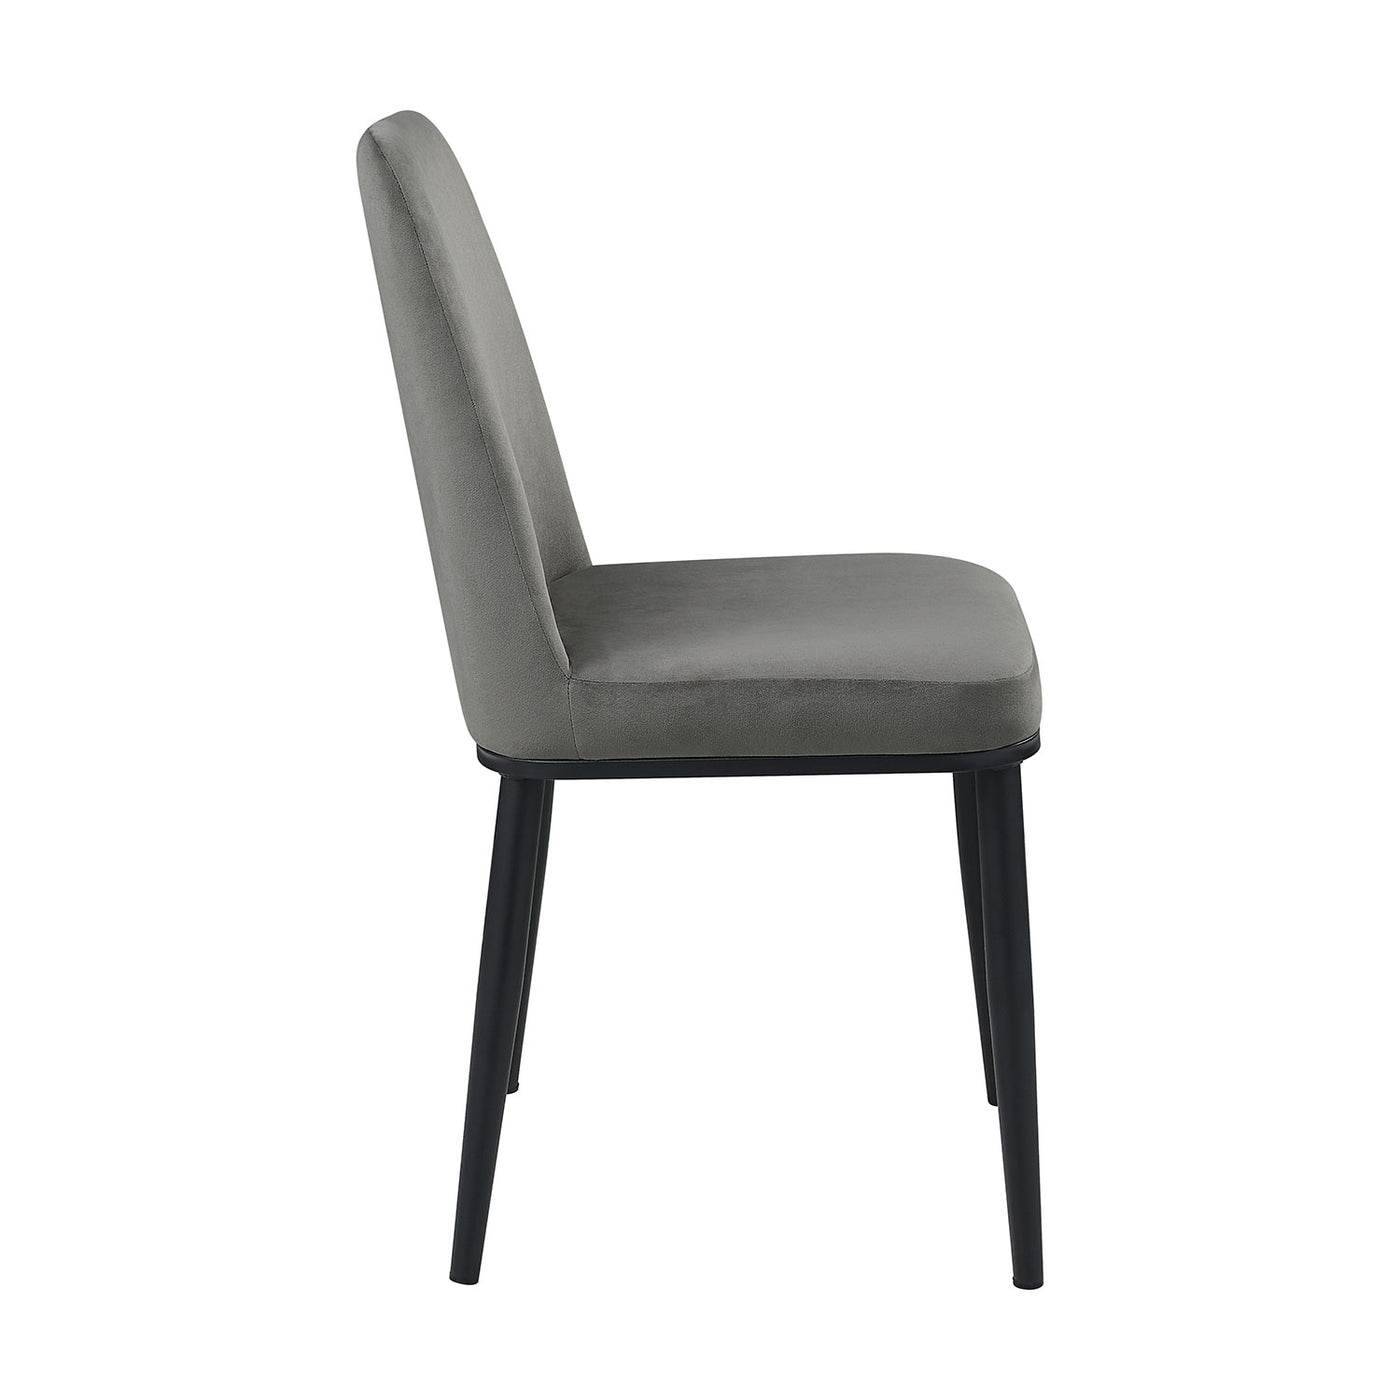 Emberly Dining Chair - Grey, Black